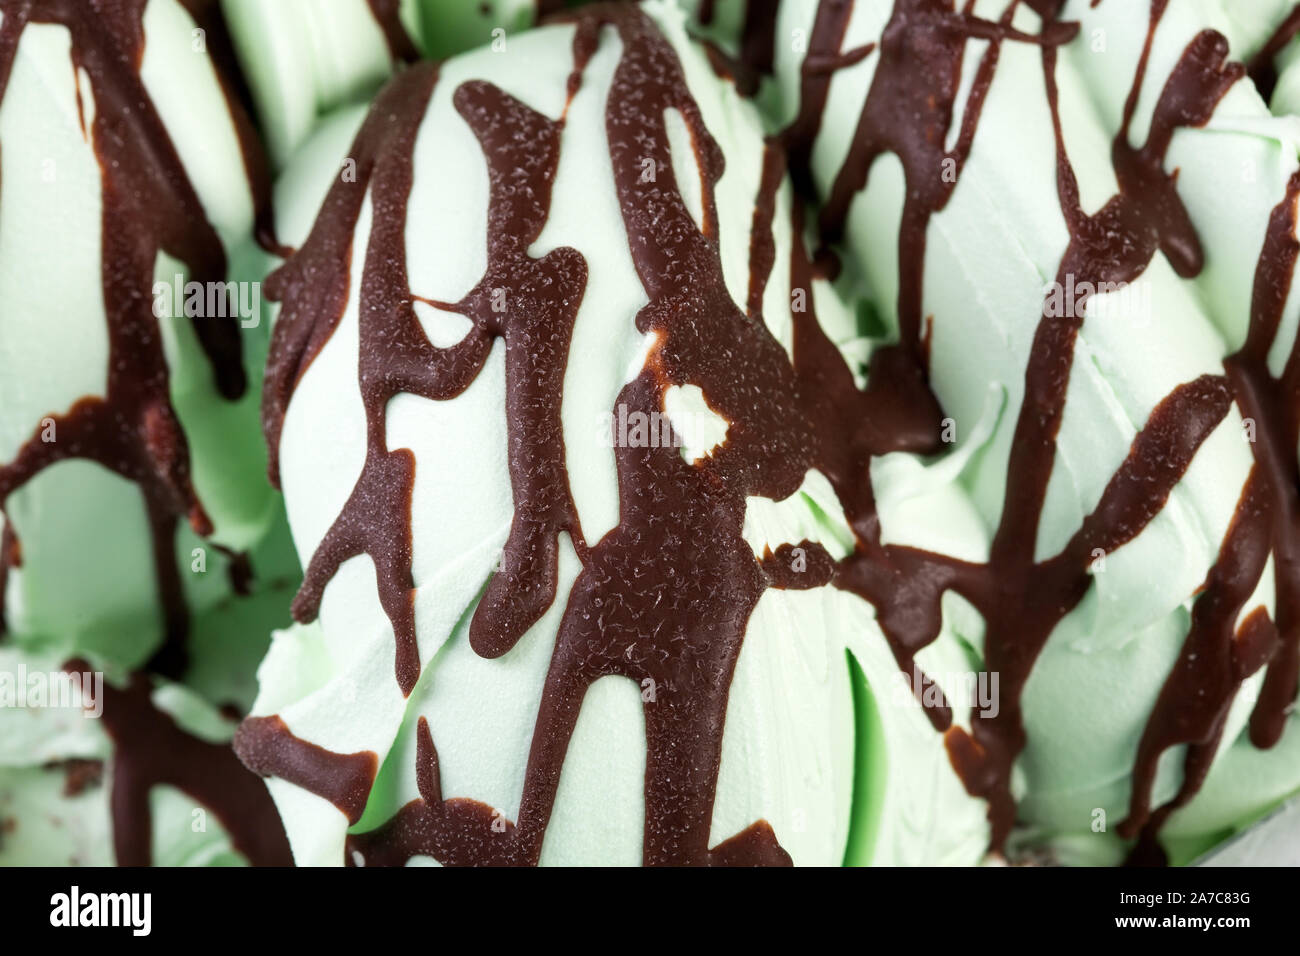 Hellgrün Eis mit Schokolade Sirup close-up. Stockfoto